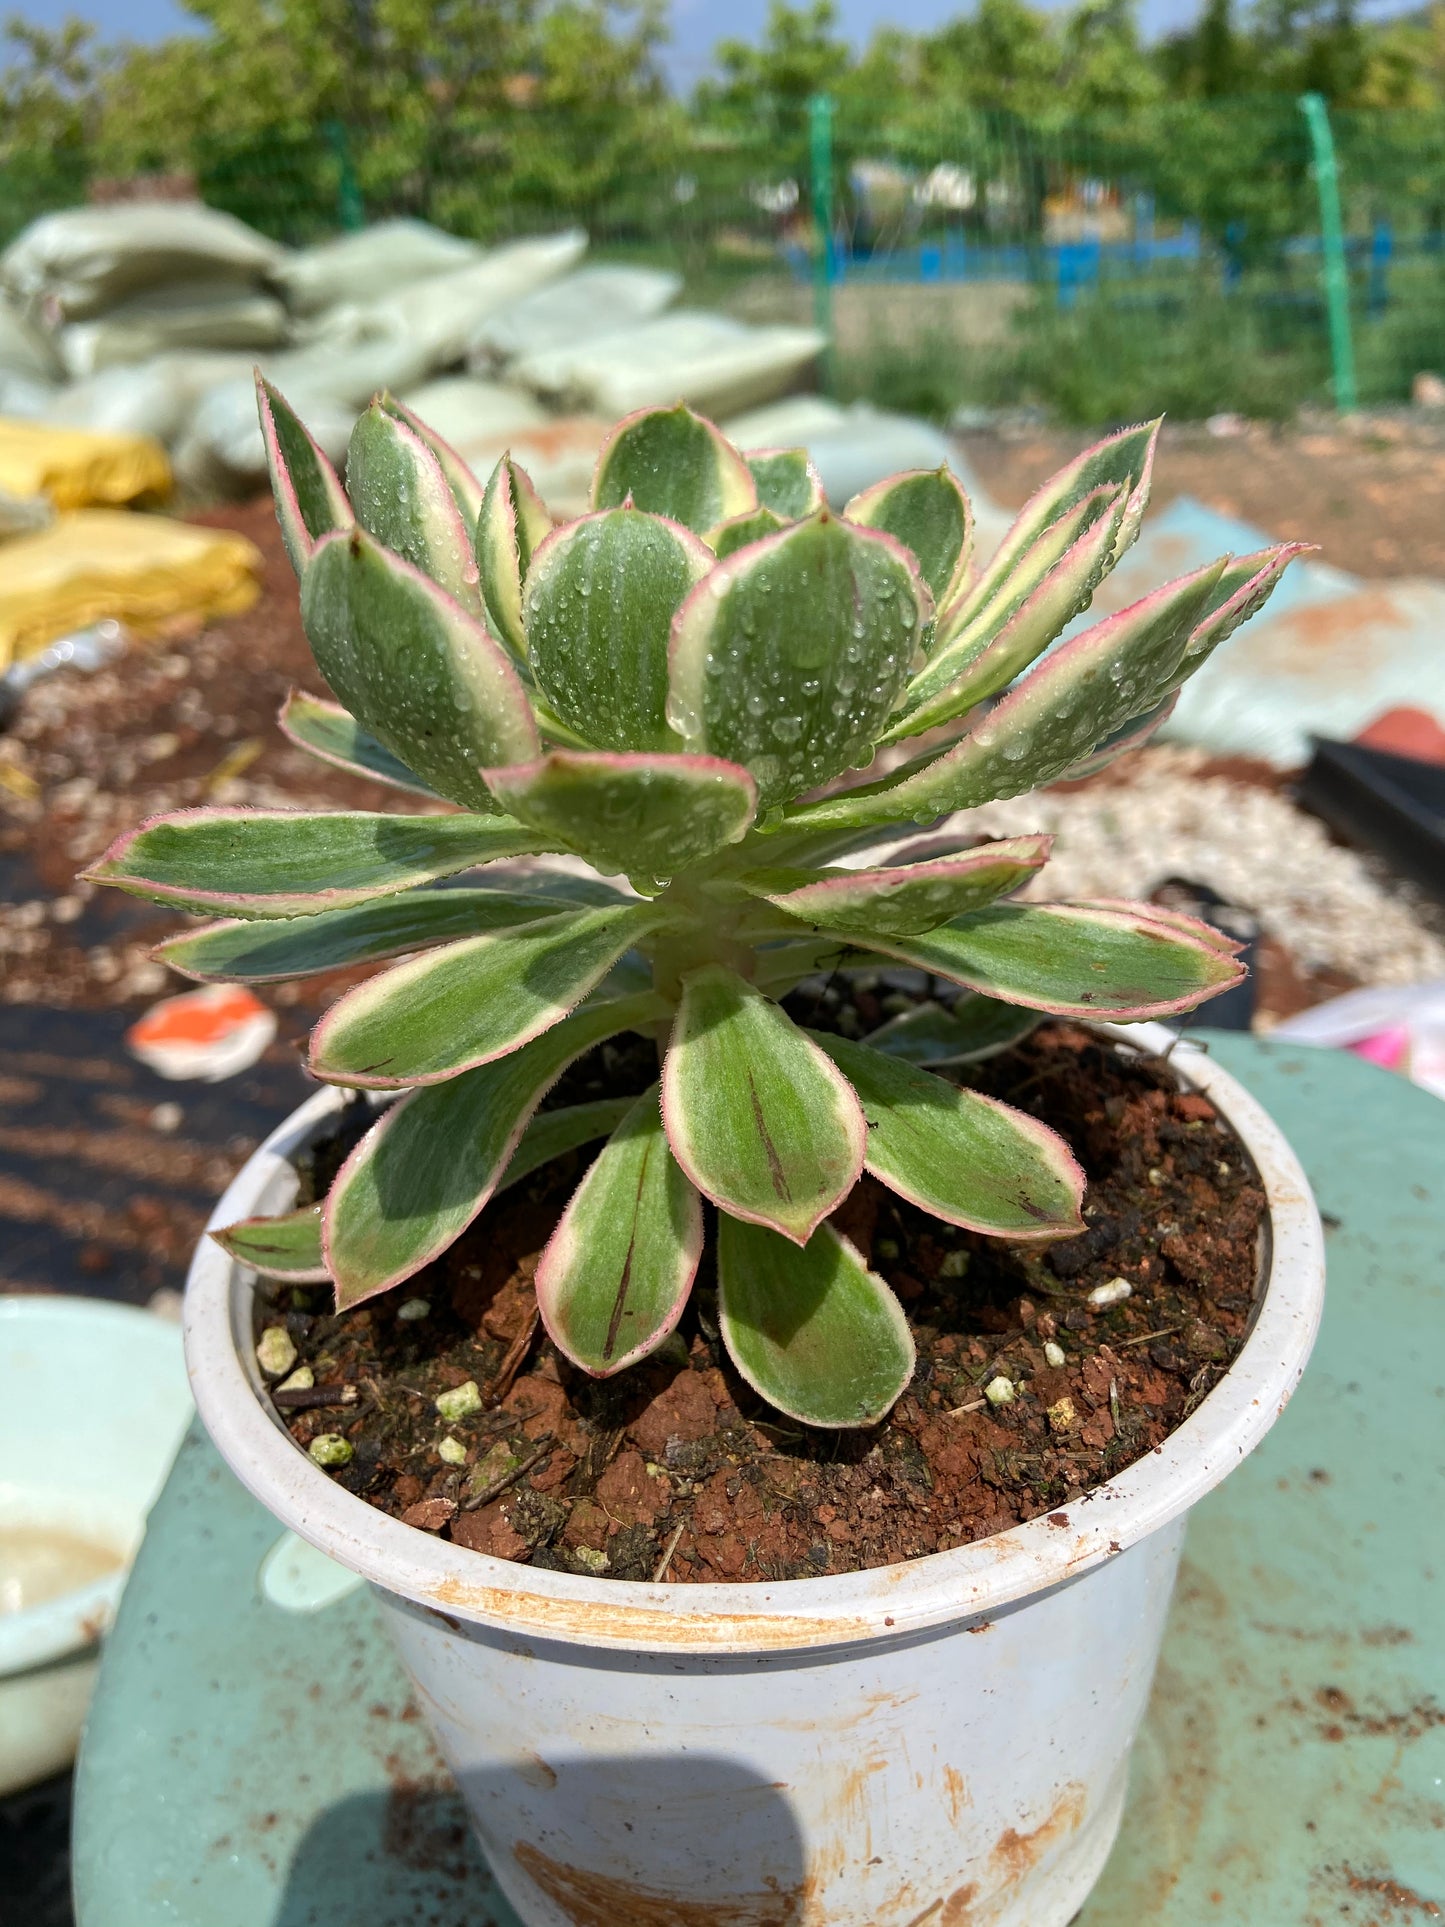 Green Rose single head 10-15cm / Aeonium single head/Variegated Natural Live Plants Succulents